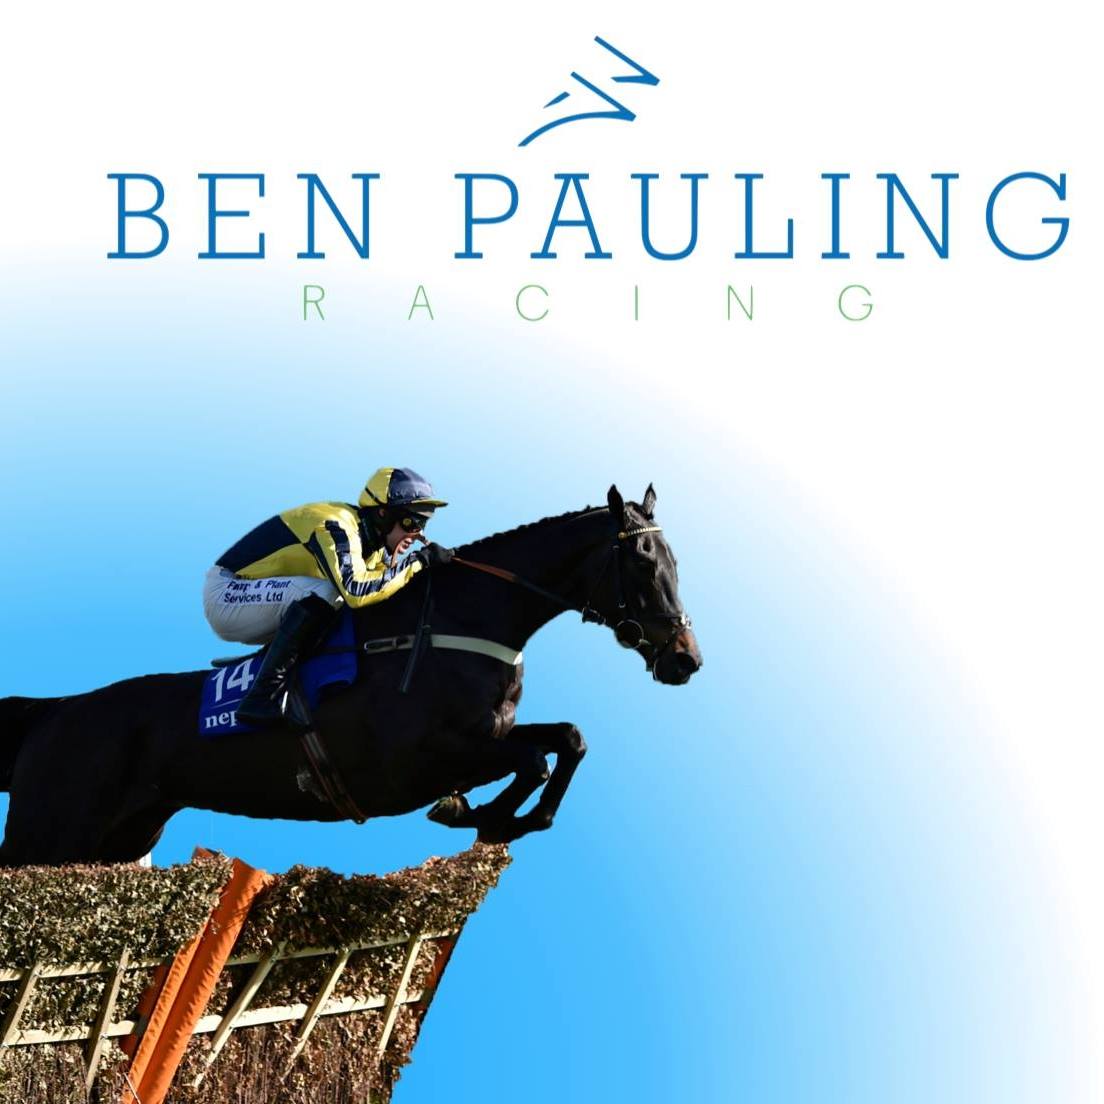 Ben Pauling Racing